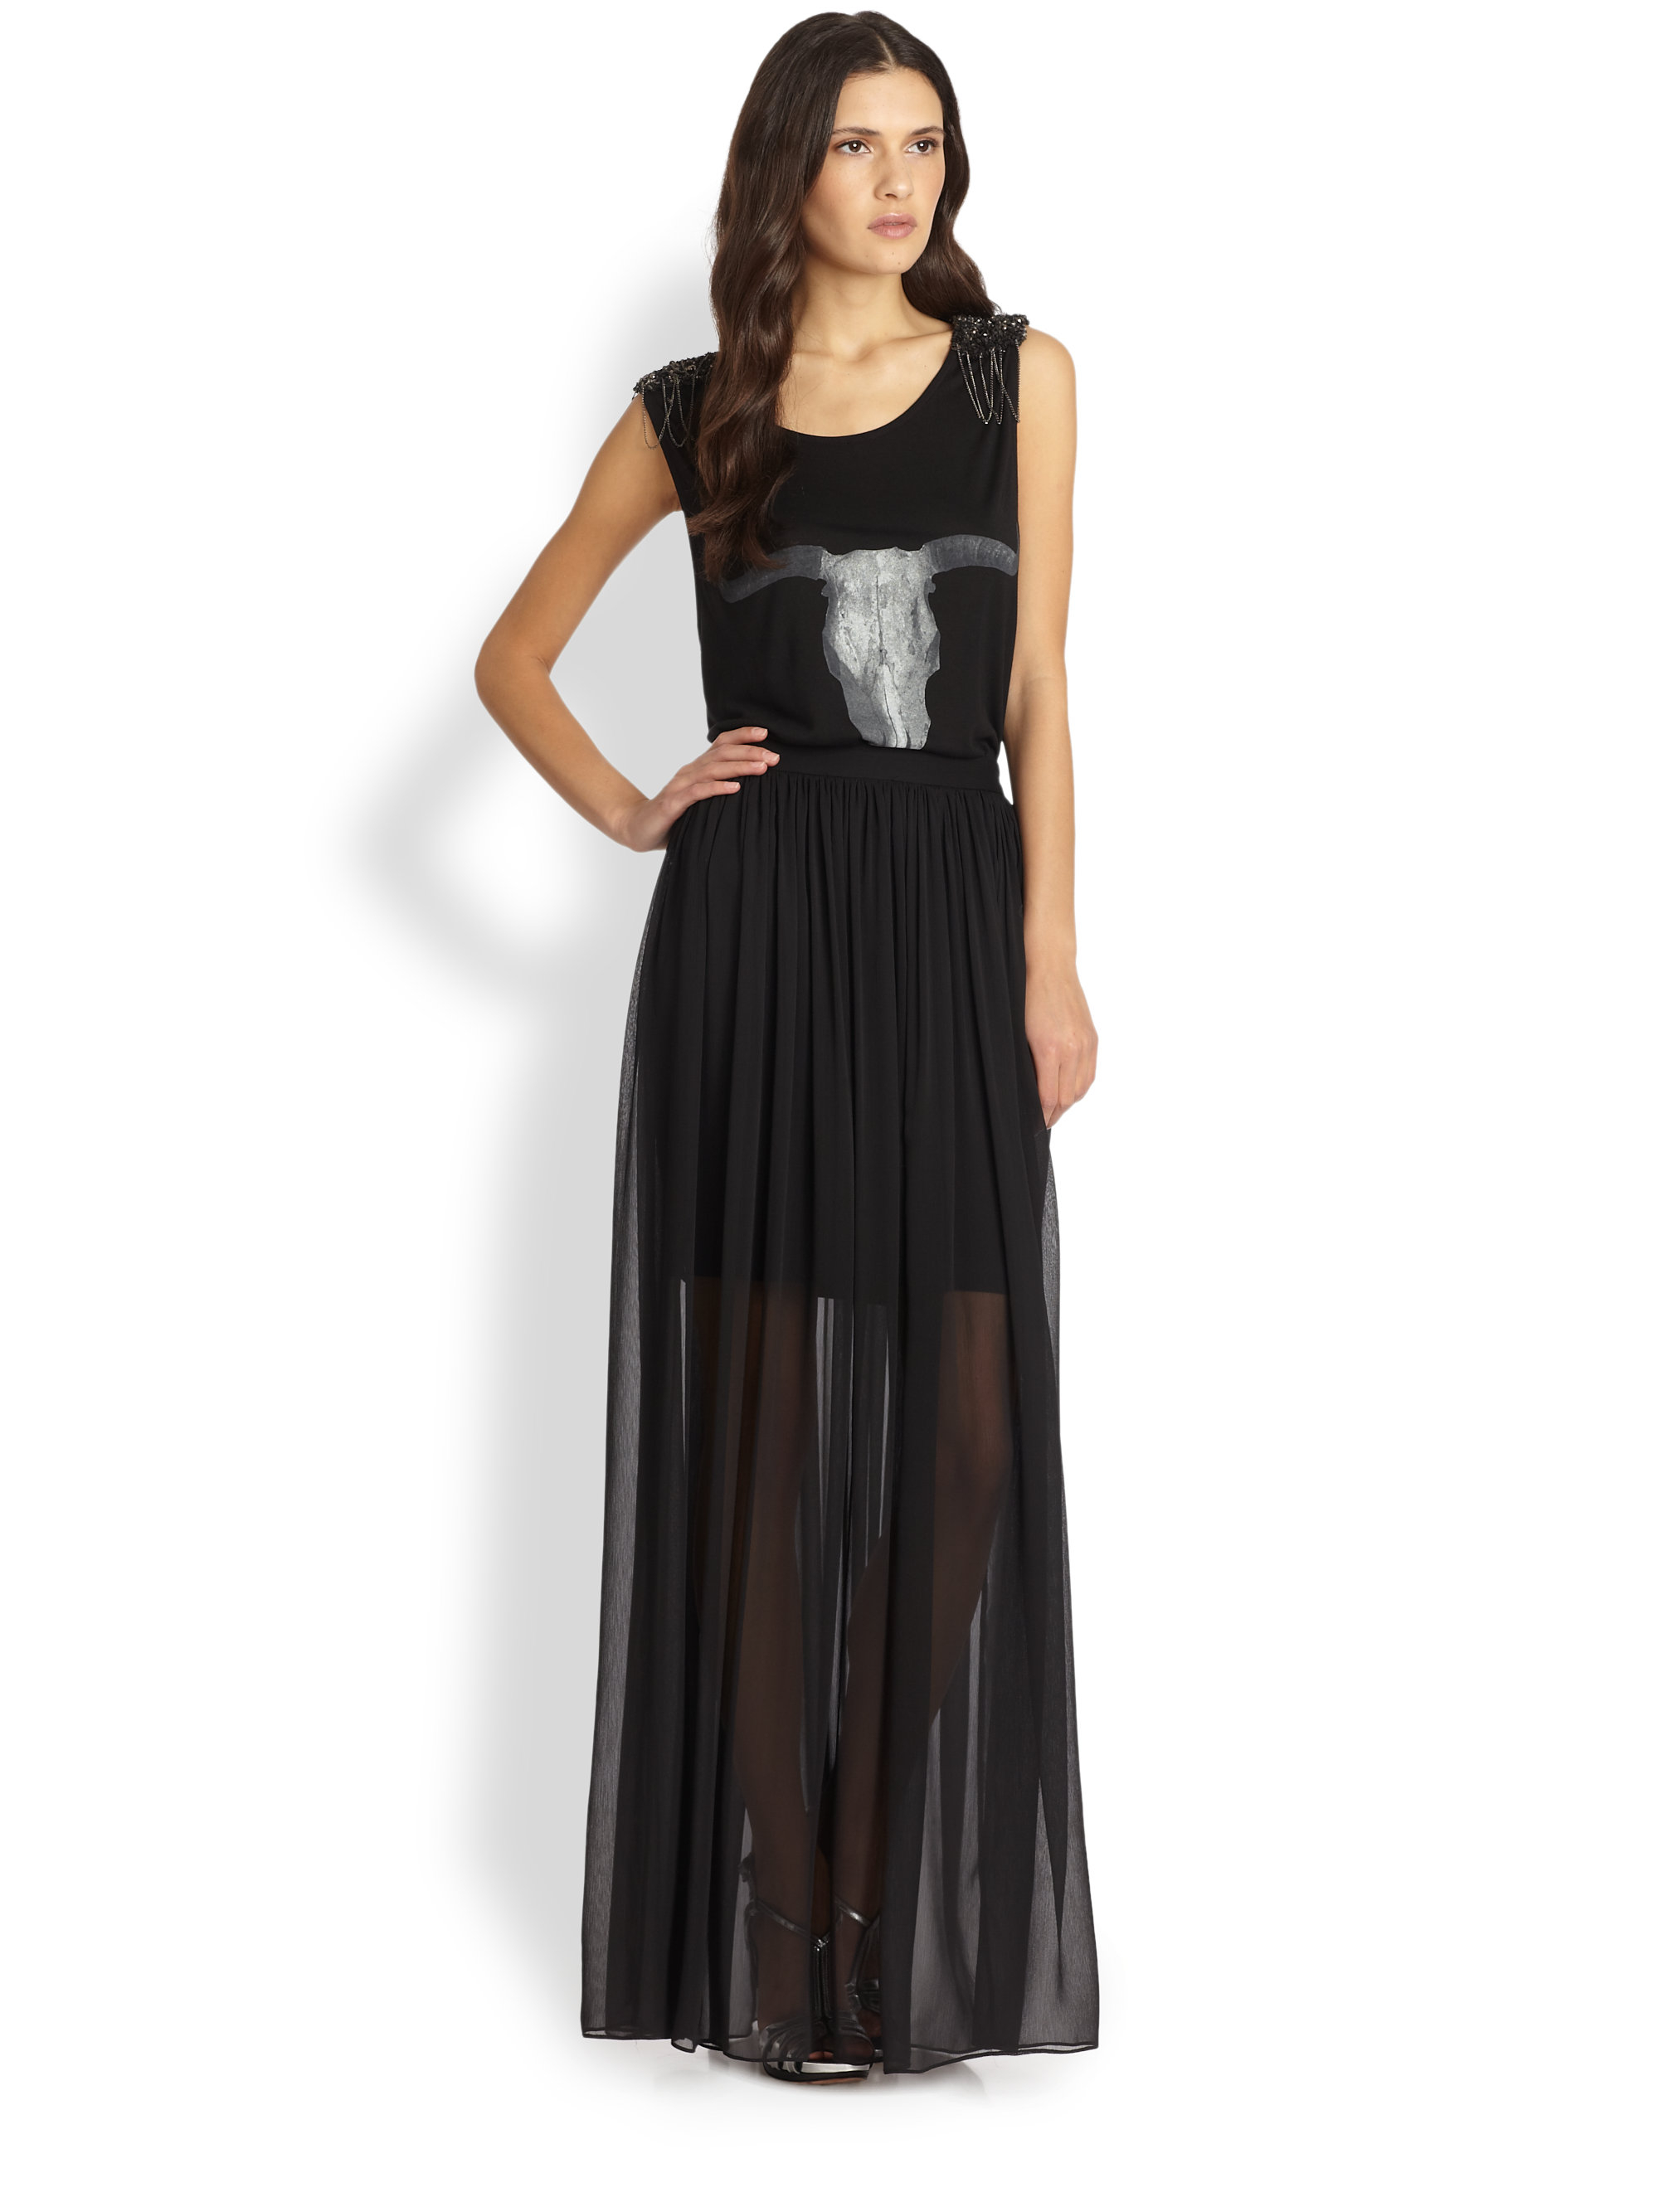 Lyst - Alice + olivia Semi-Sheer Maxi Skirt in Black